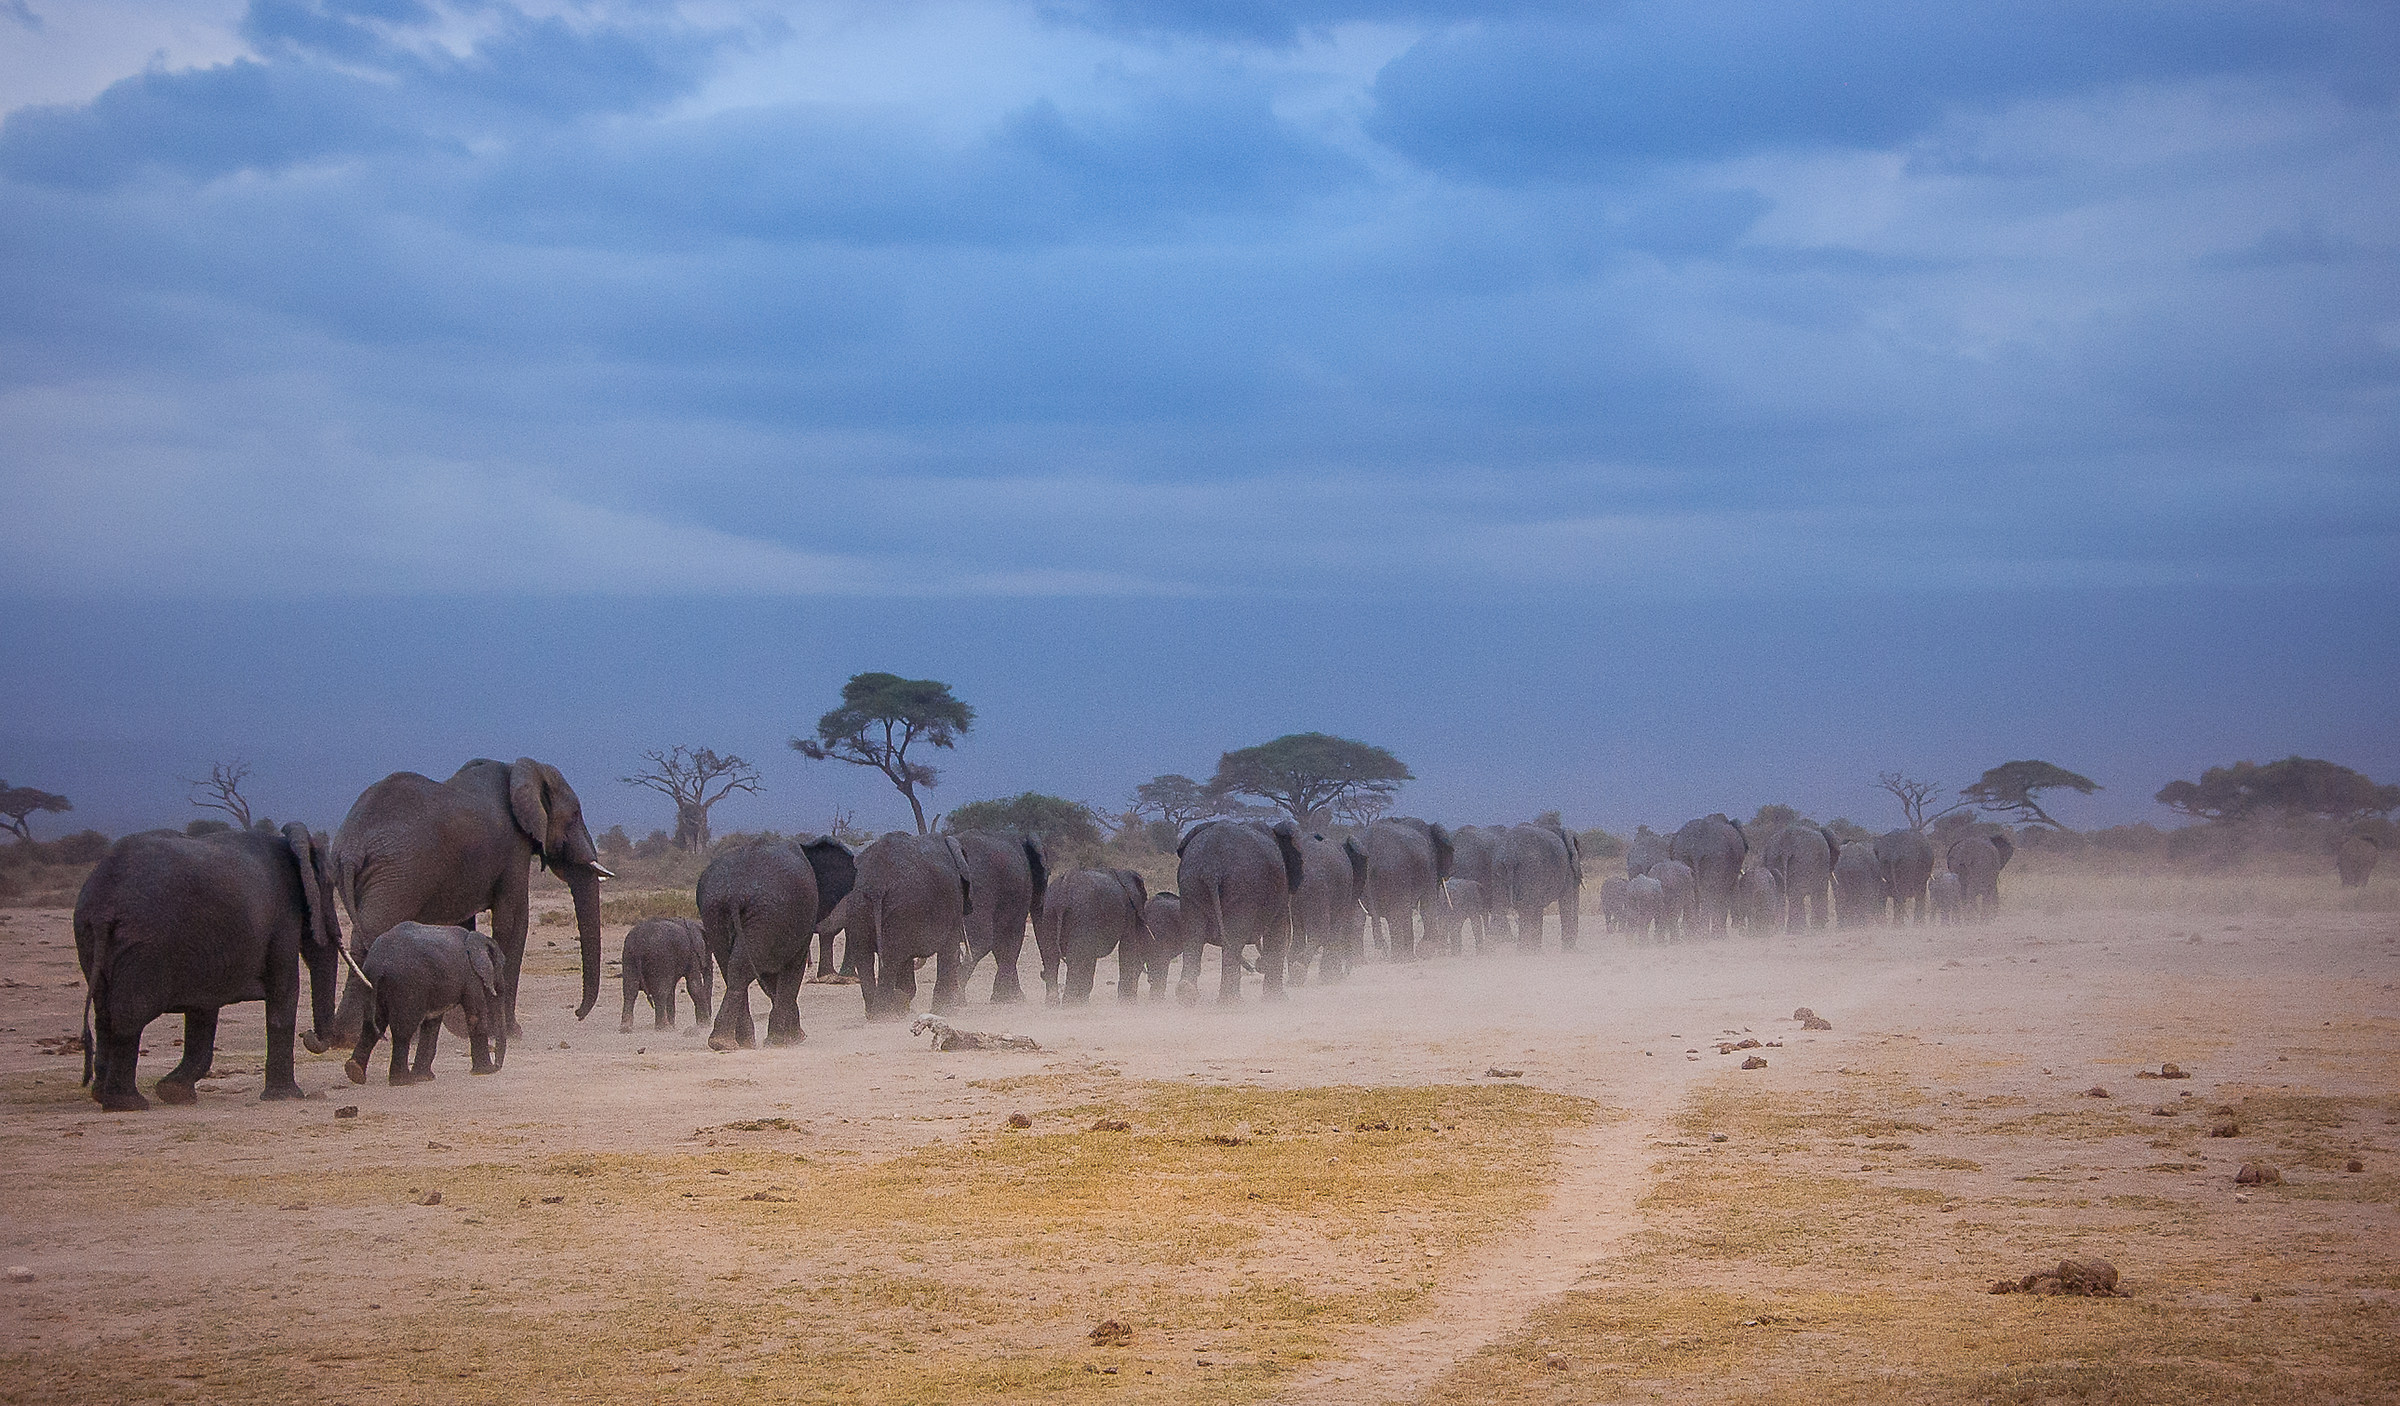 All towards the bush ( Amboseli)...